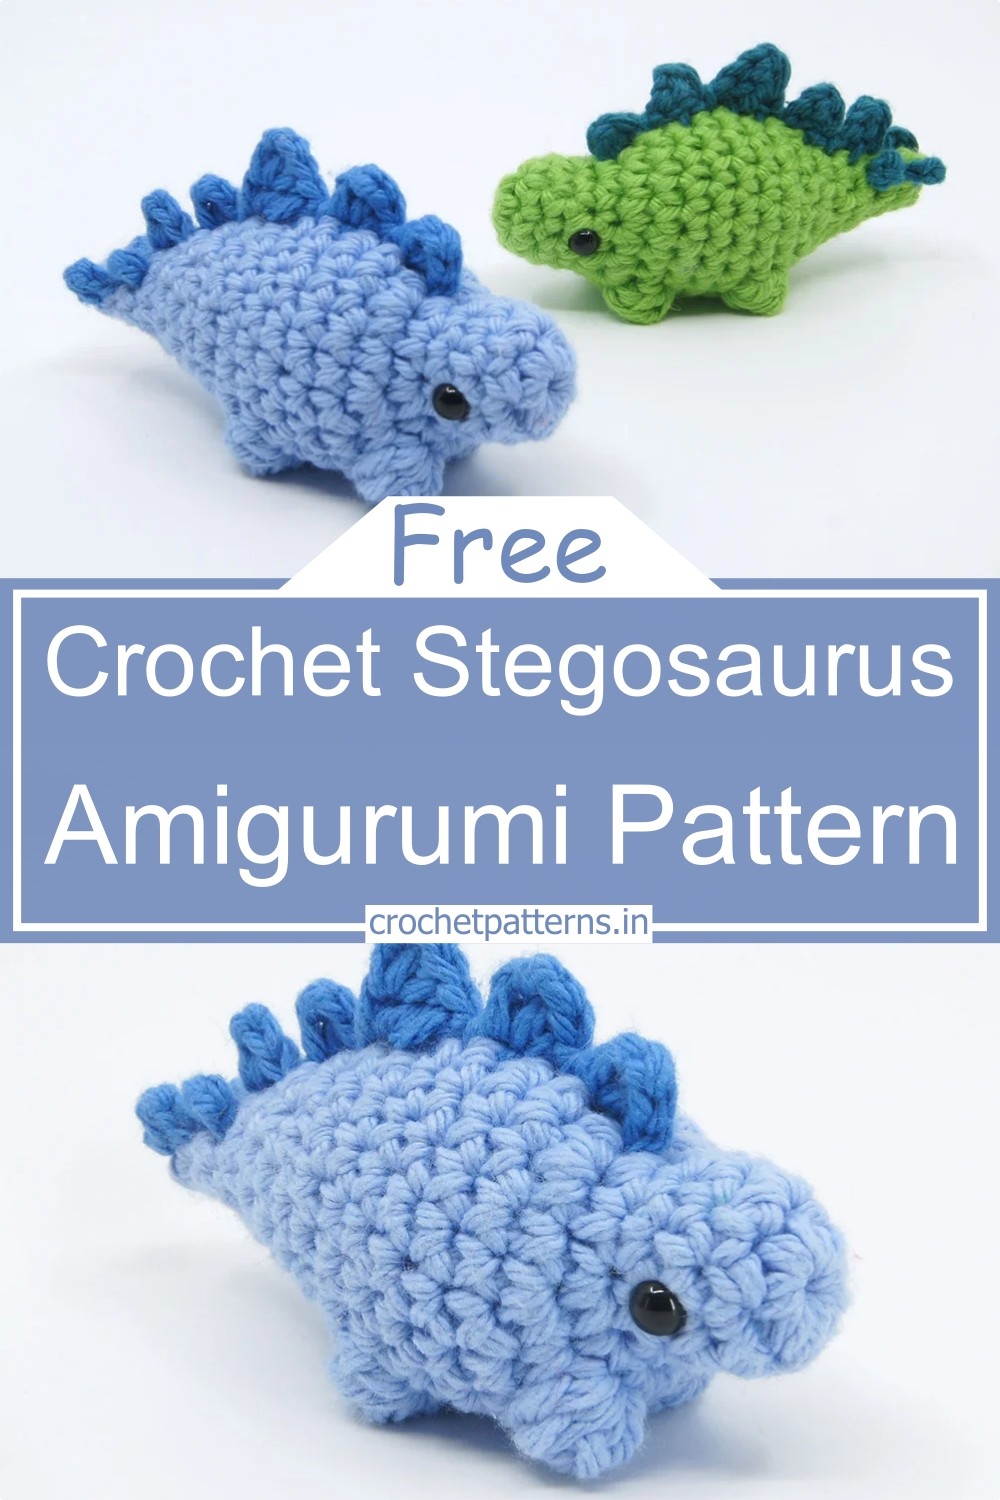 Crochet Stegosaurus Amigurumi Pattern